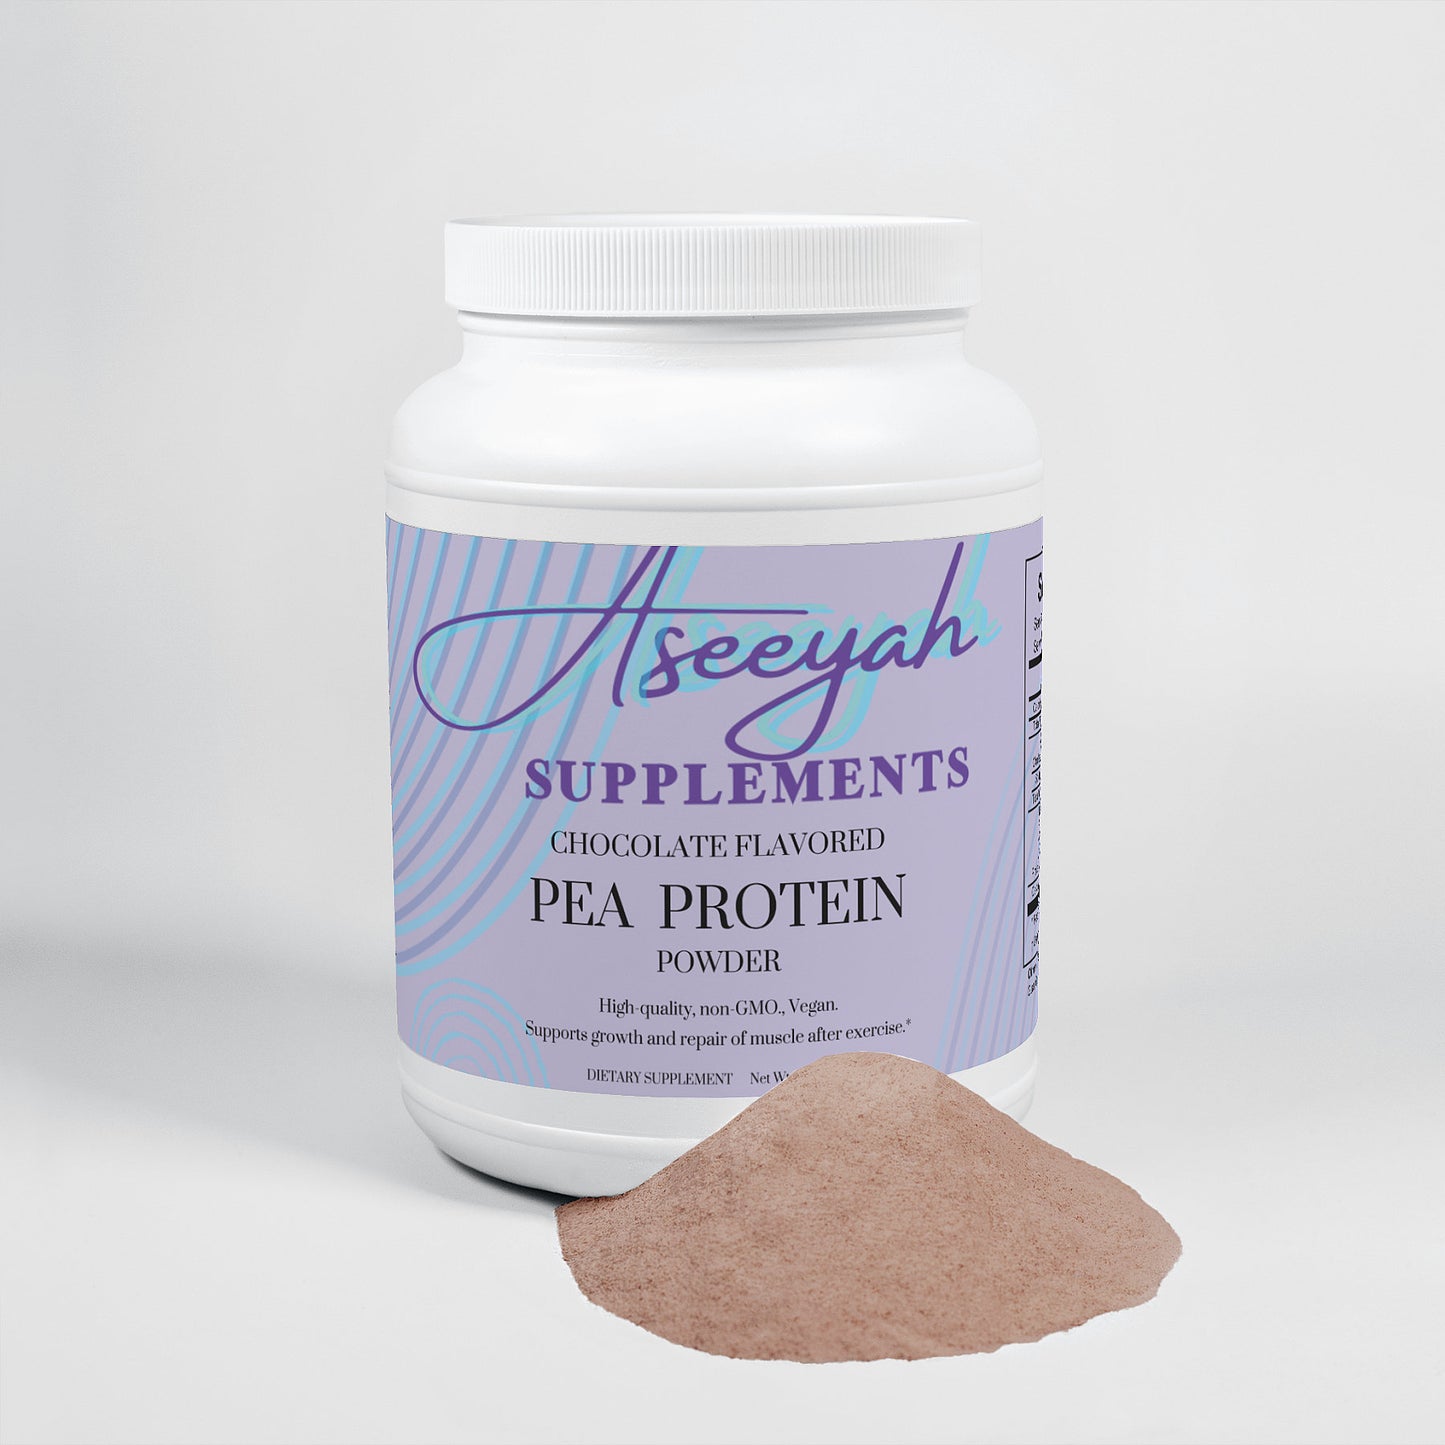 Chocolate flavored Vegan Pea Protein powder